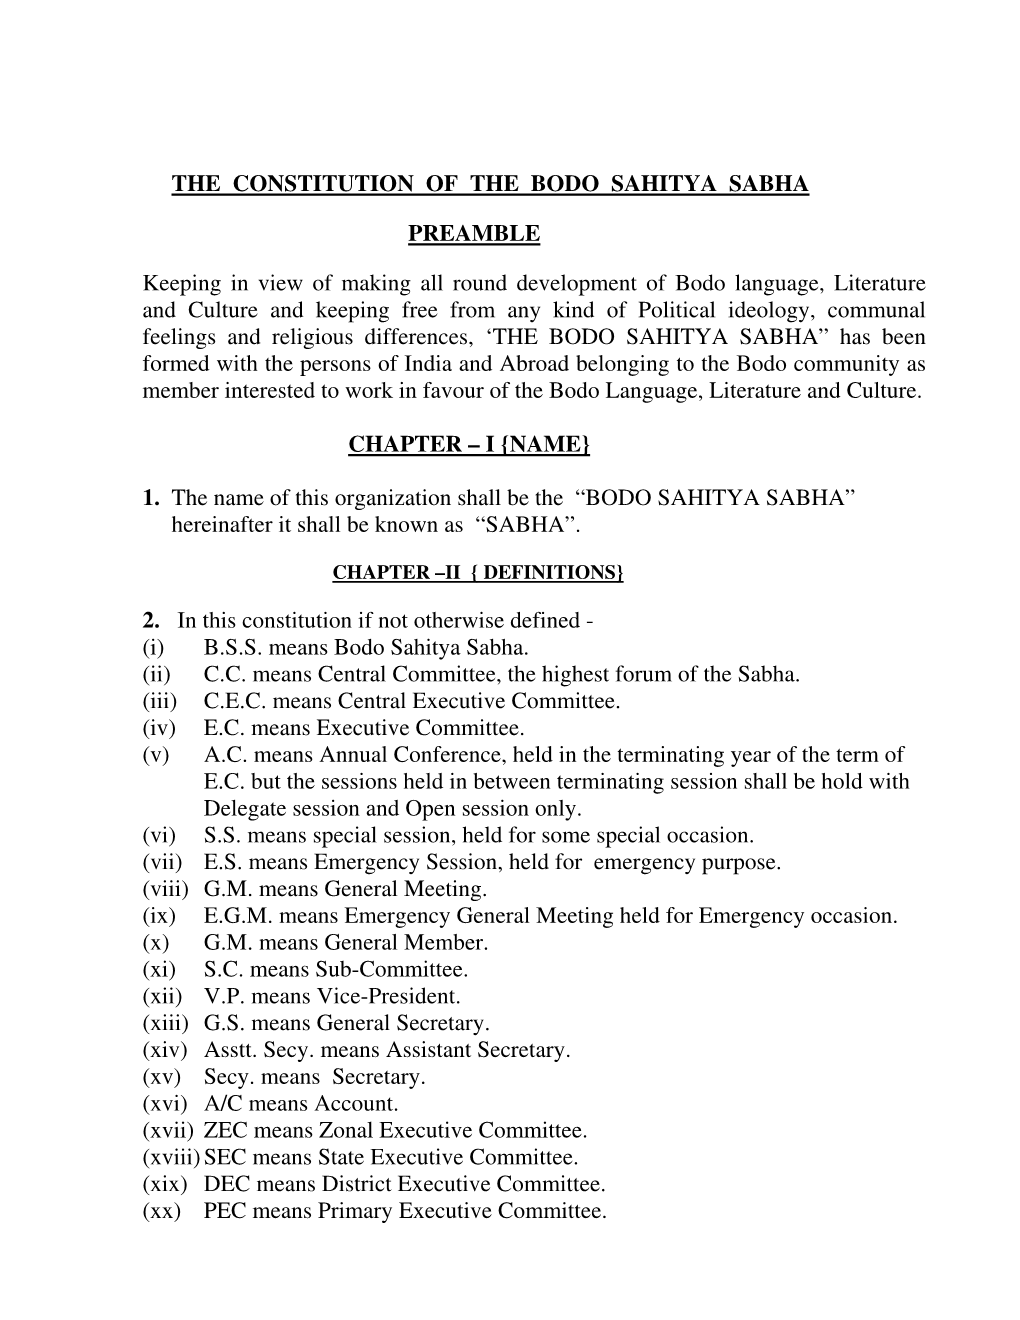 The Constitution of the Bodo Sahitya Sabha